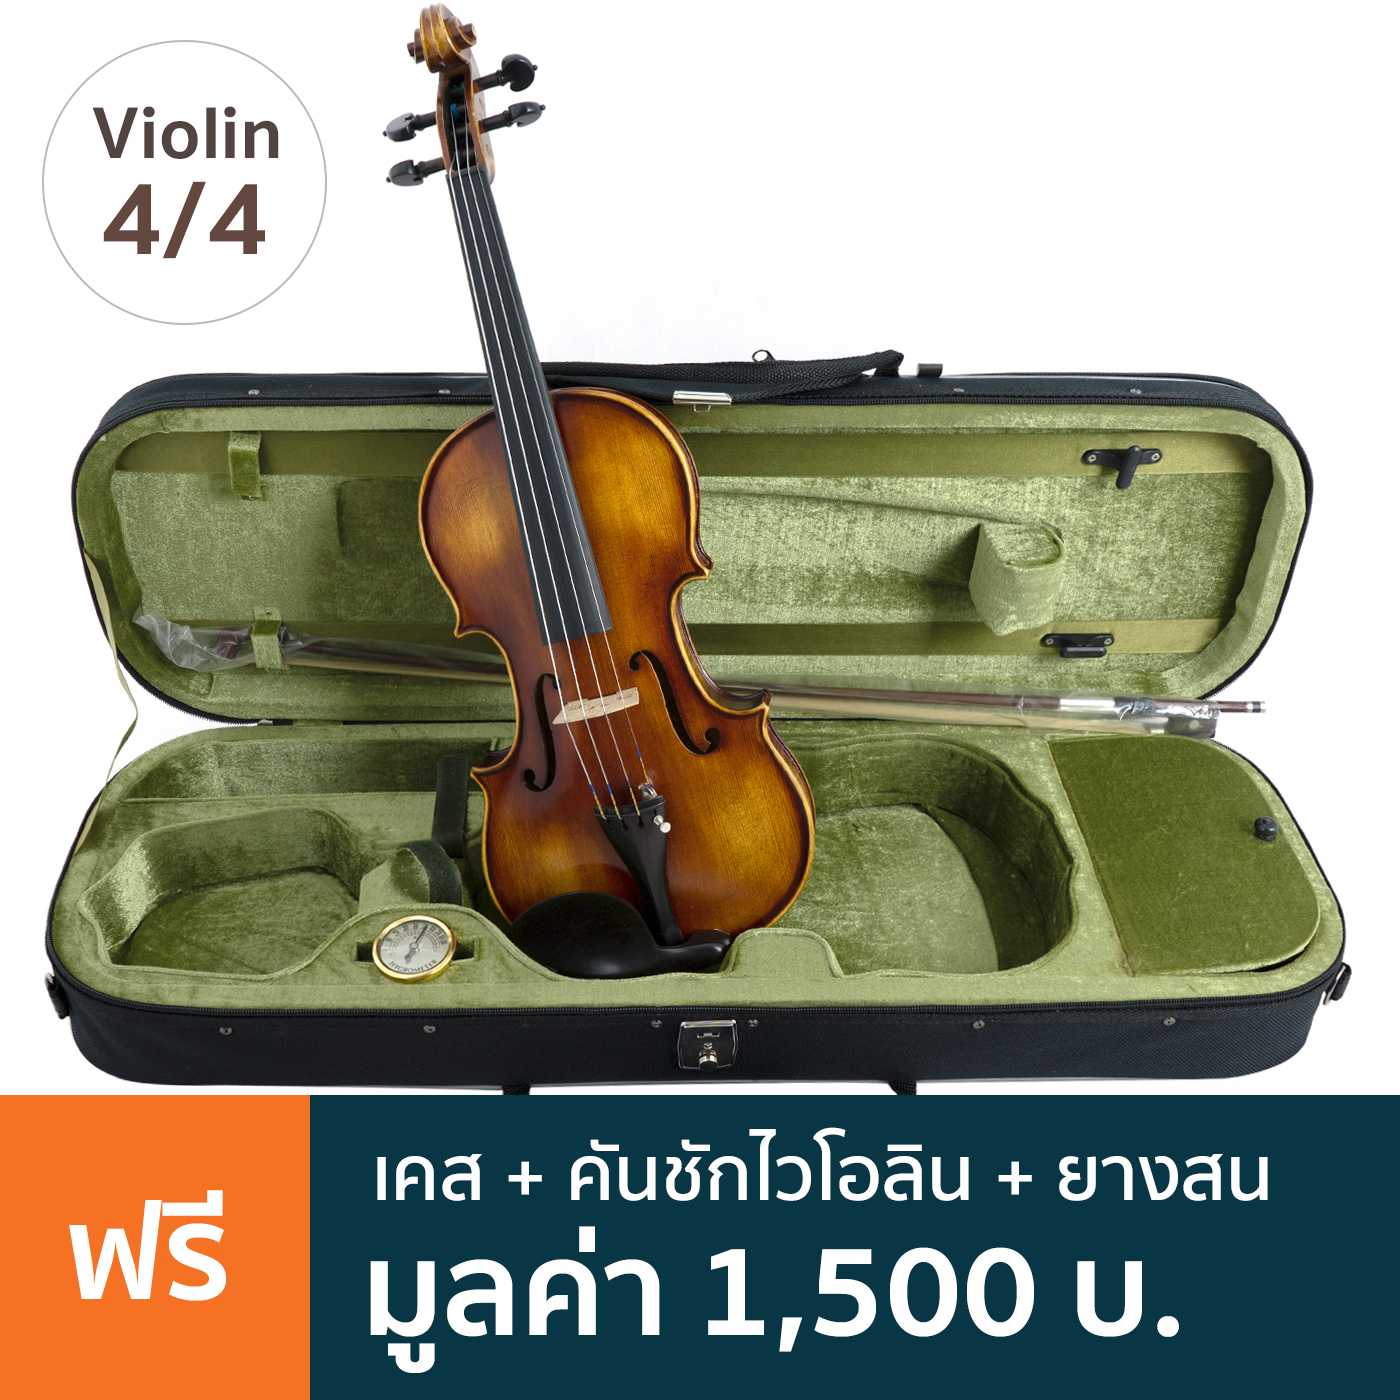 Prima P-480 Violin ไวโอลิน 4/4 ระดับมืออาชีพ เฟลมเมเปิ้ล เคลือบด้าน+ แถมฟรีซอฟต์เคส & คันชัก & ยางสน & ตัววัดความชื้น